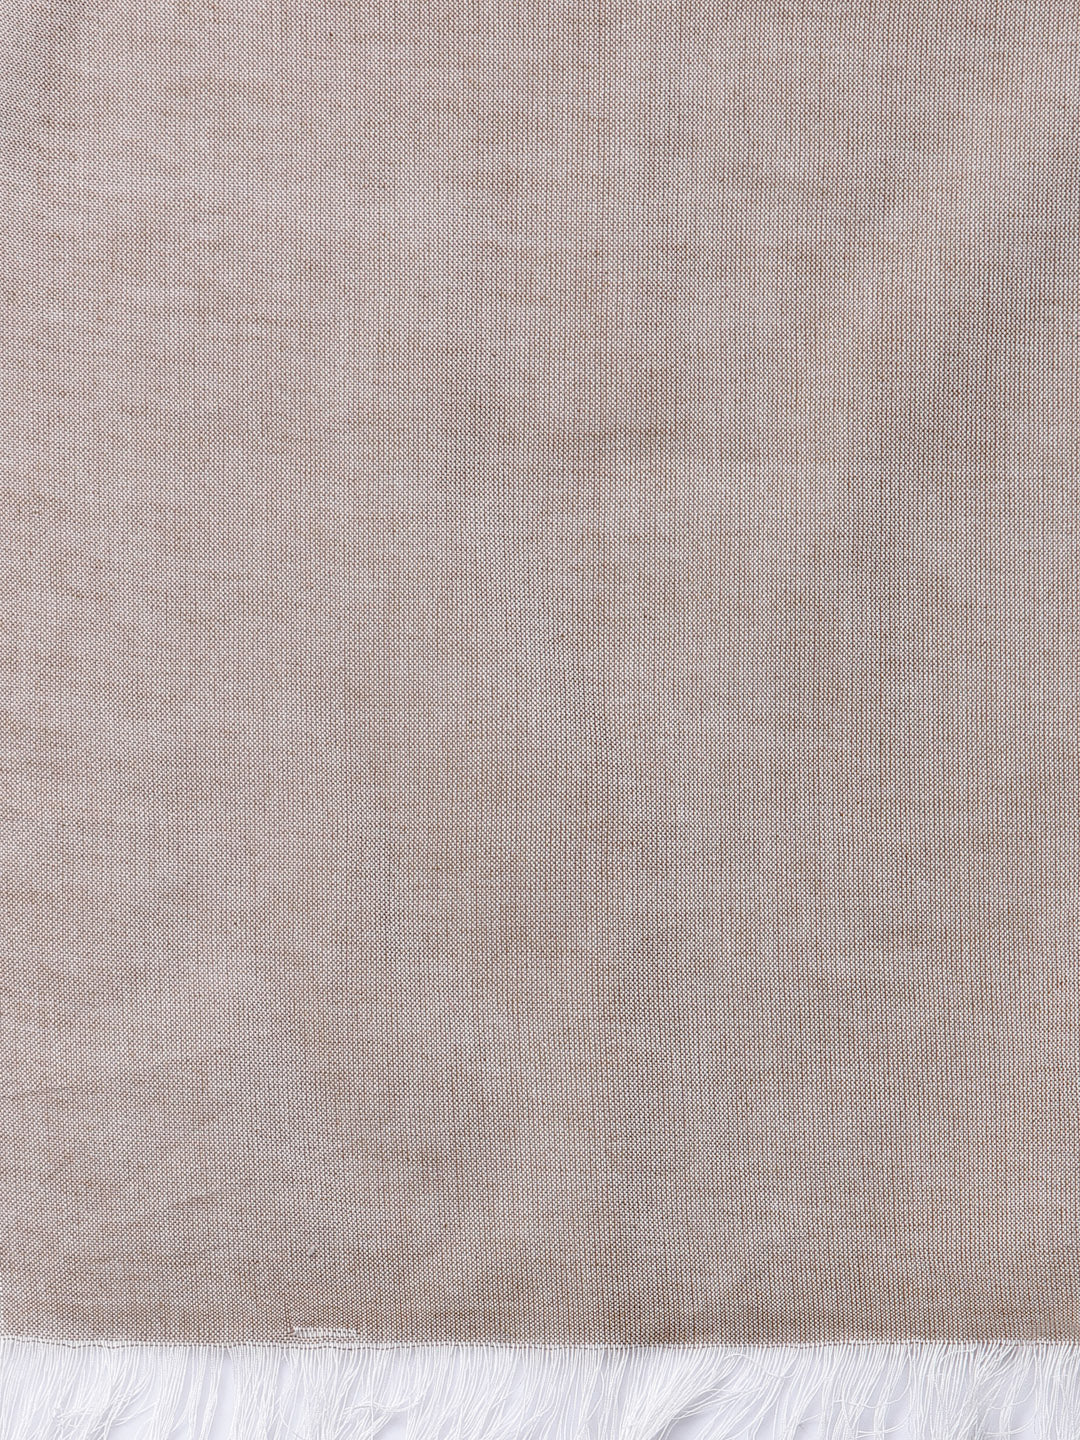 Arrabi Brown Solid Handwoven Cotton Full Size Stole (185 x 85 cm)